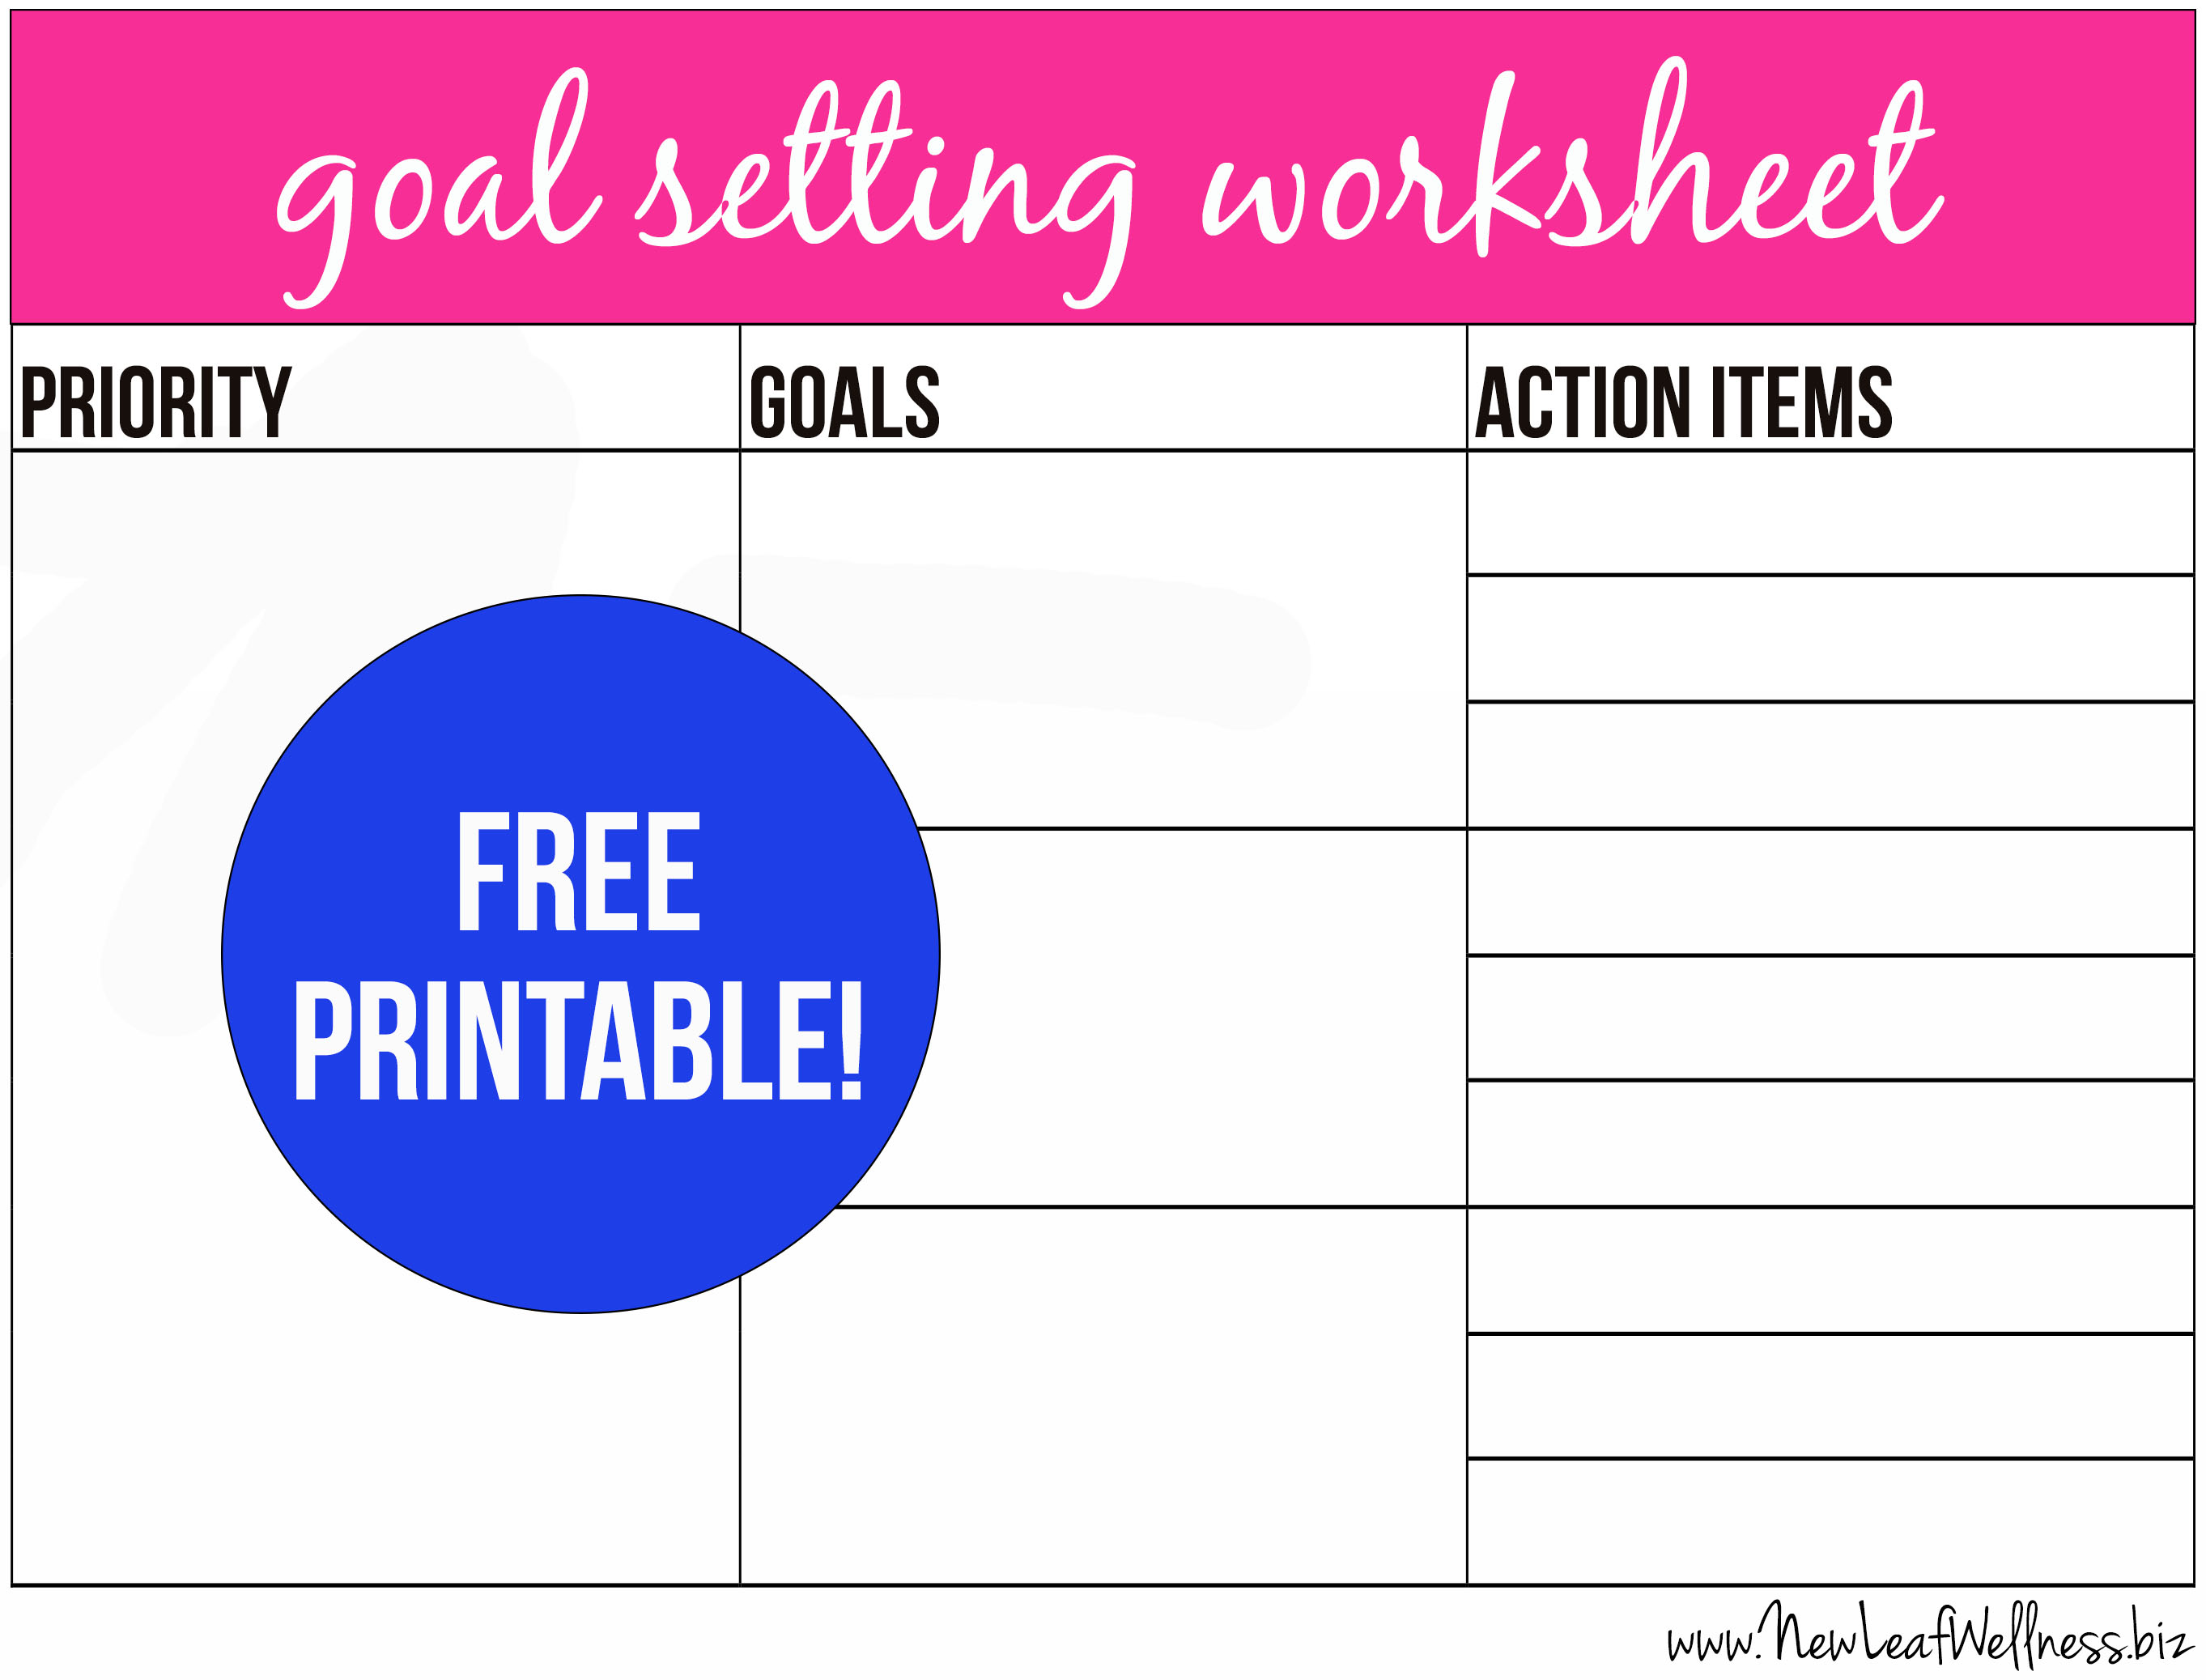 free-printable-goal-setting-worksheet-and-instructions-new-leaf-wellness